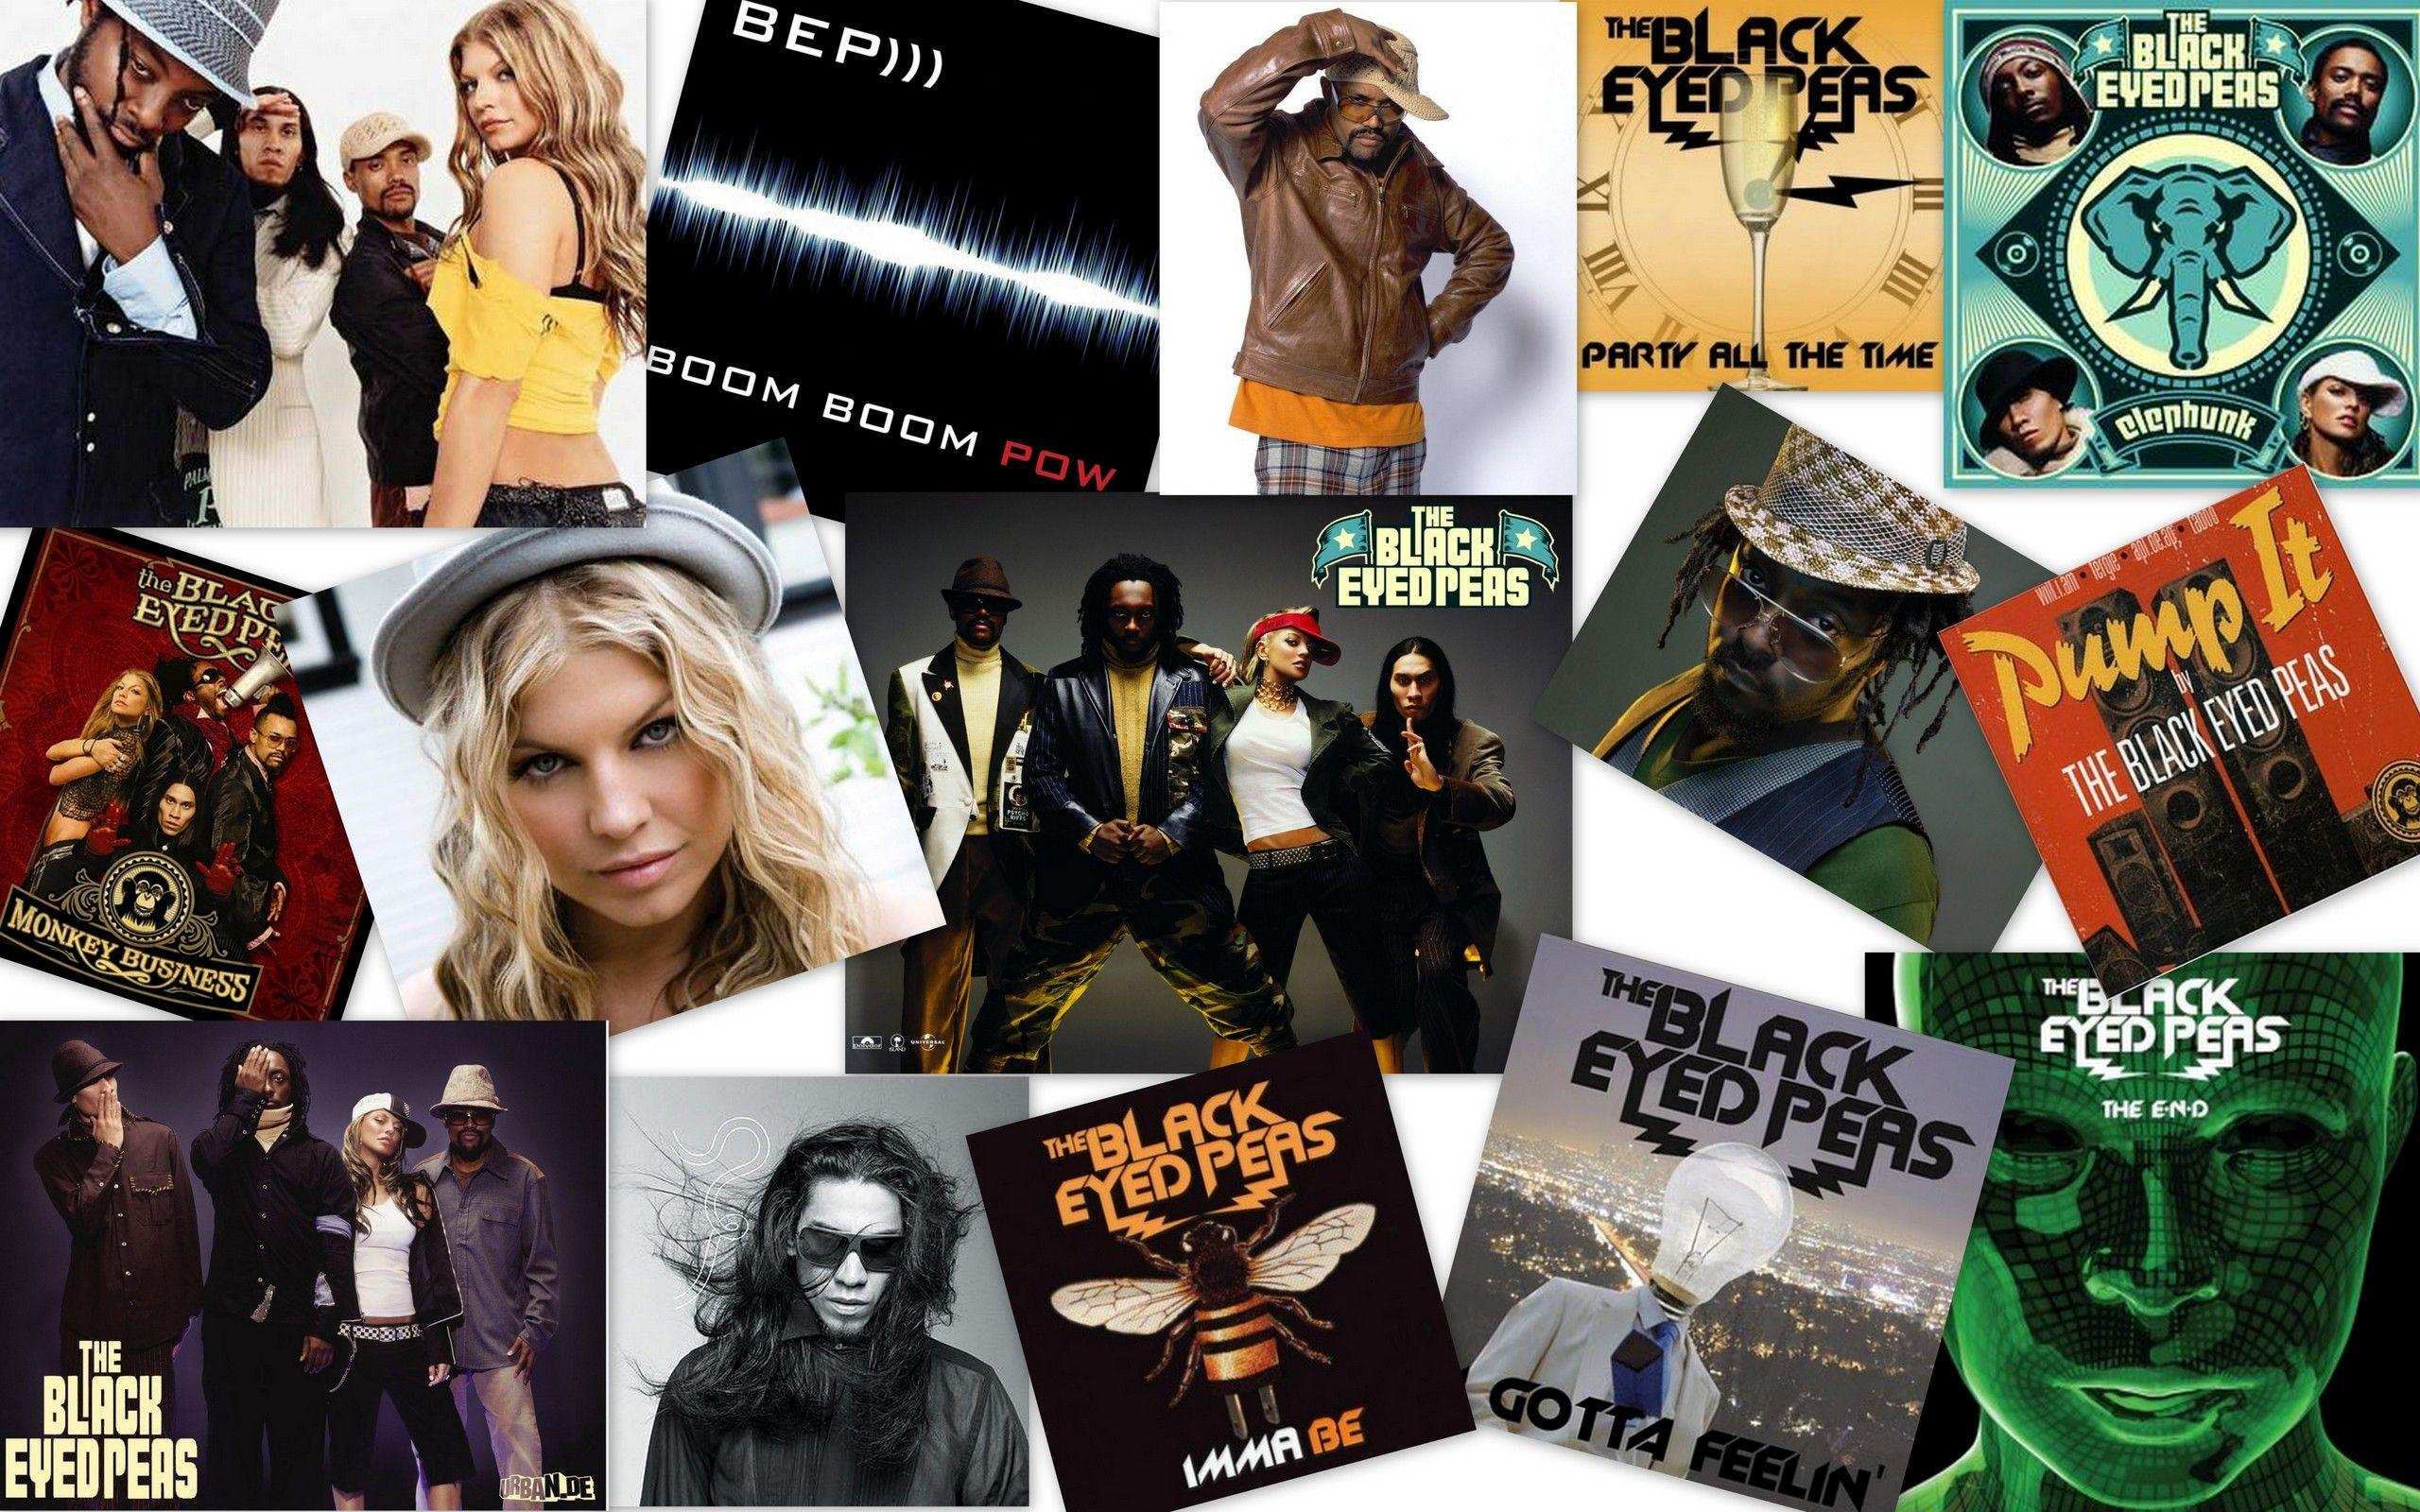 Black Eyed Peas. Full HD Widescreen wallpaper for desktop